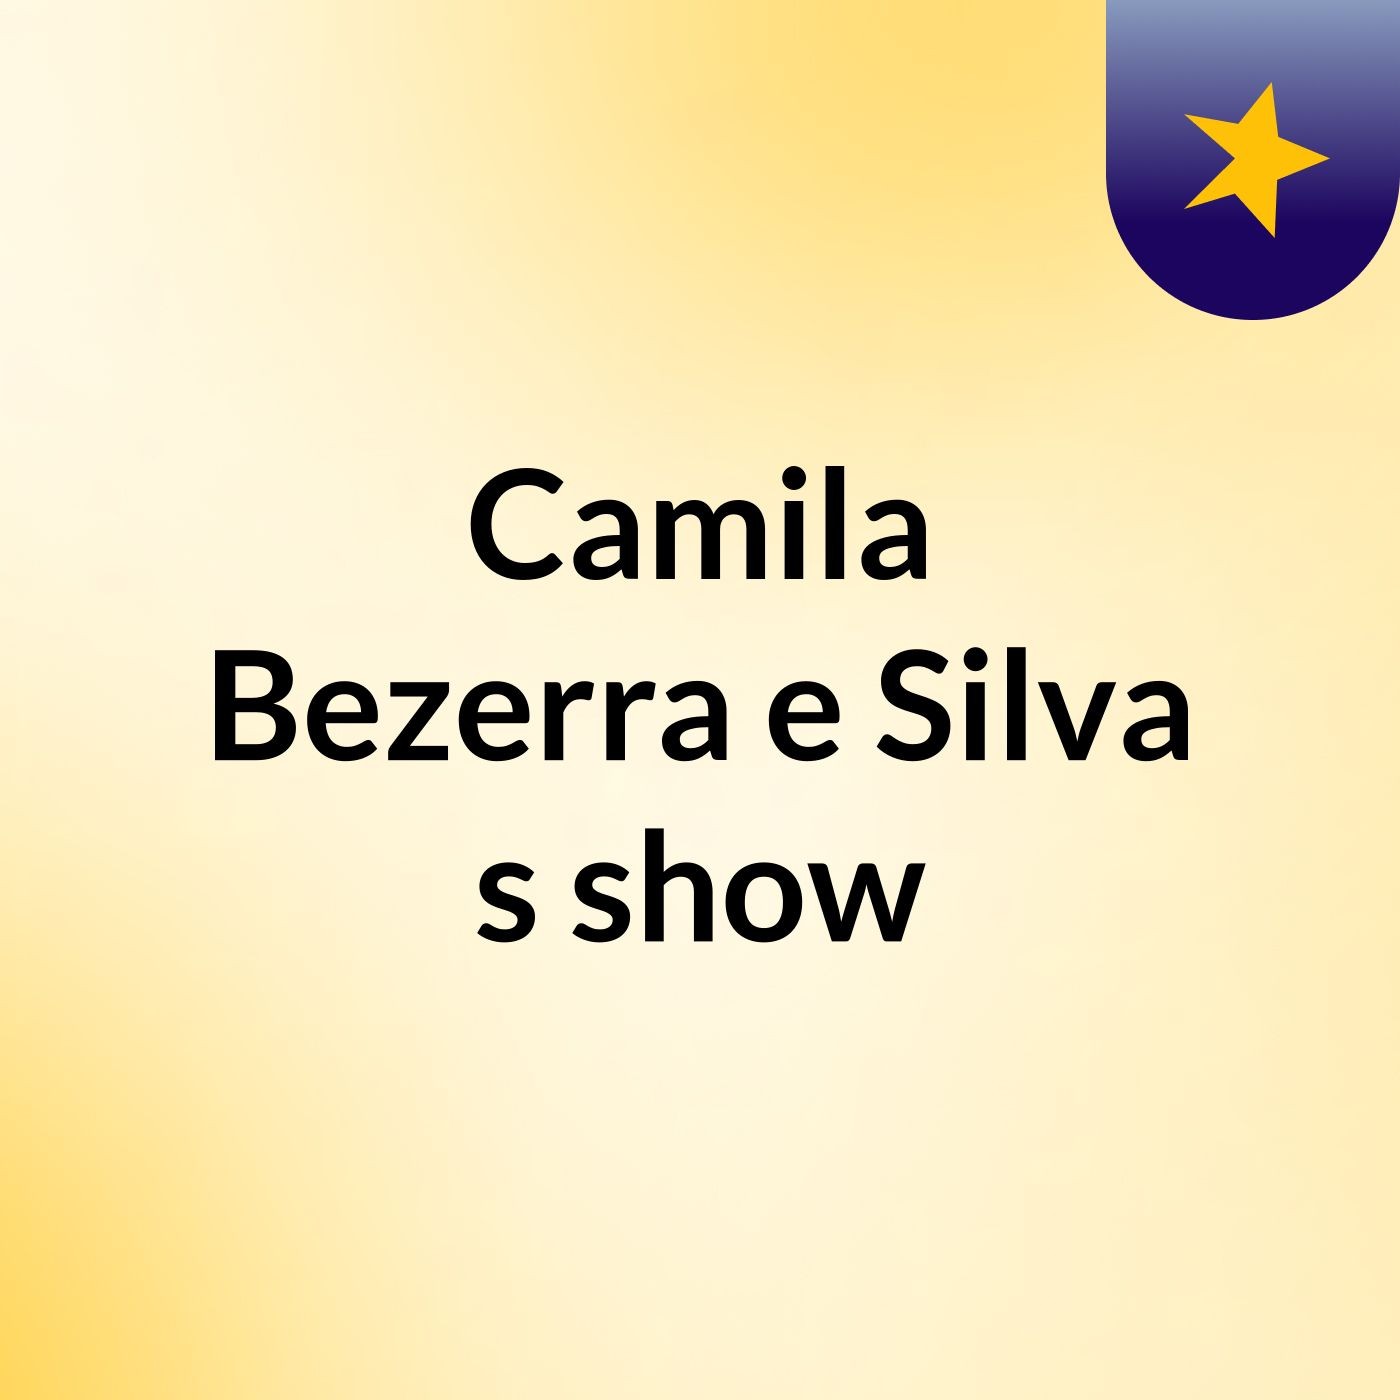 Camila Bezerra e Silva's show